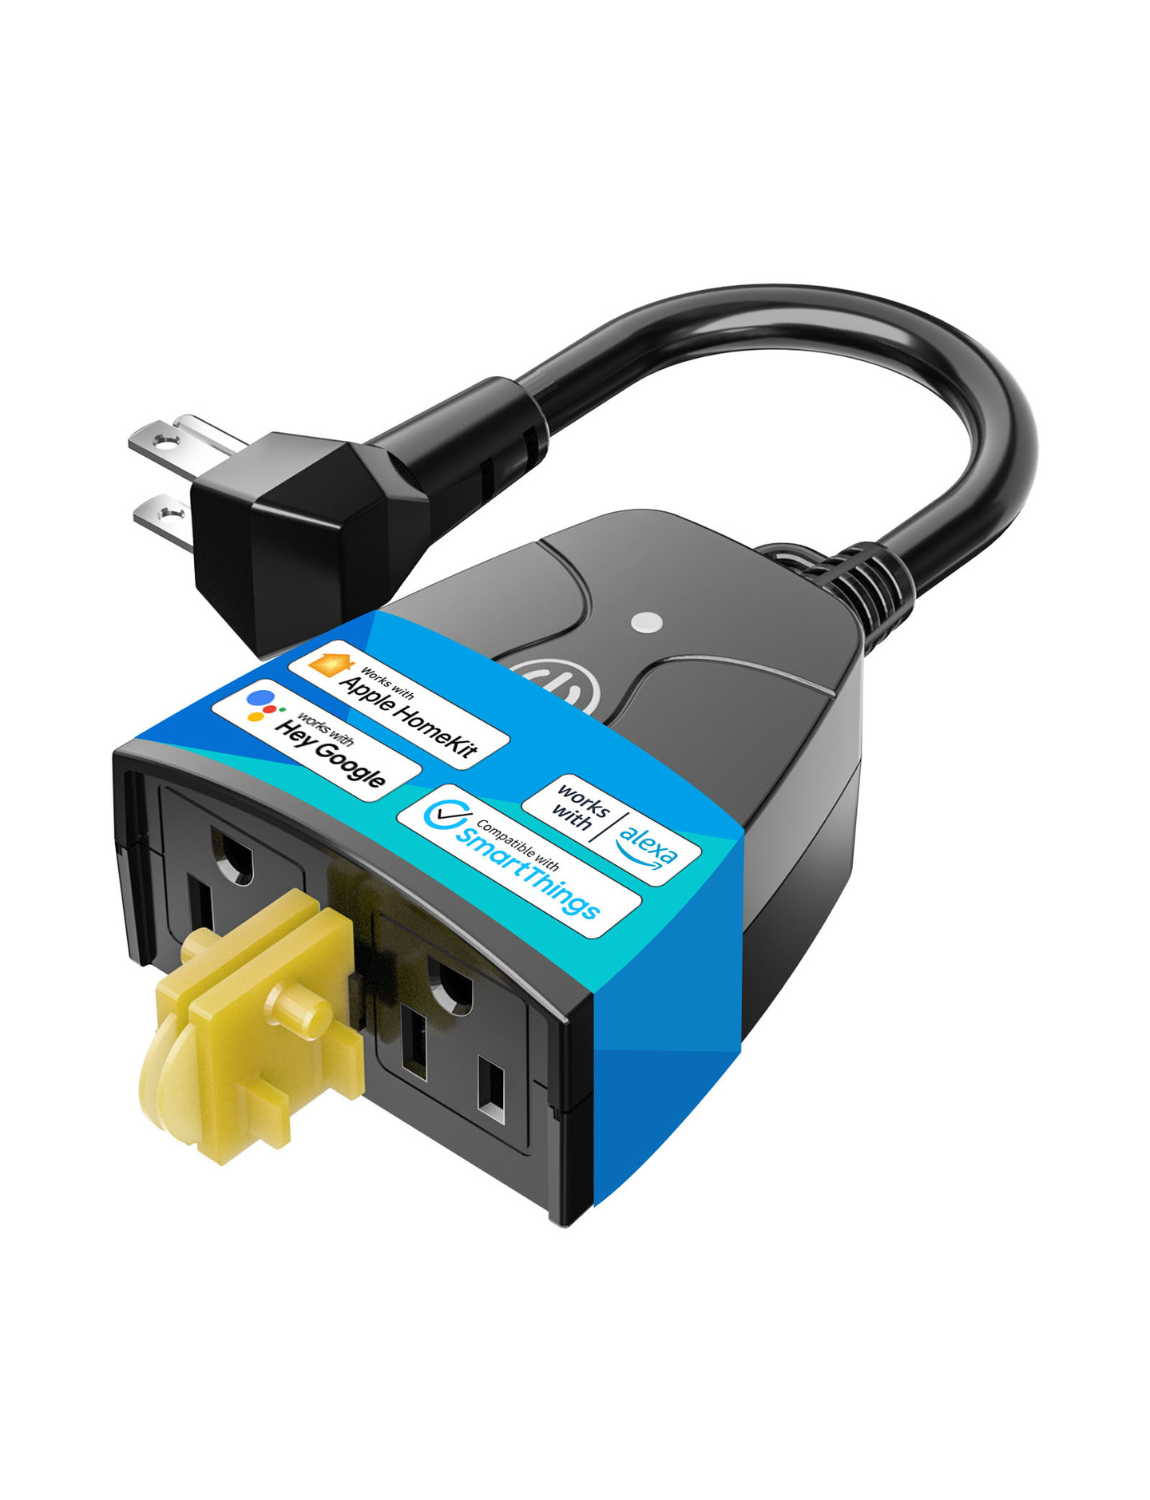 Meross Outdoor Smart Plug, MSS620BHK (US/CA Version)